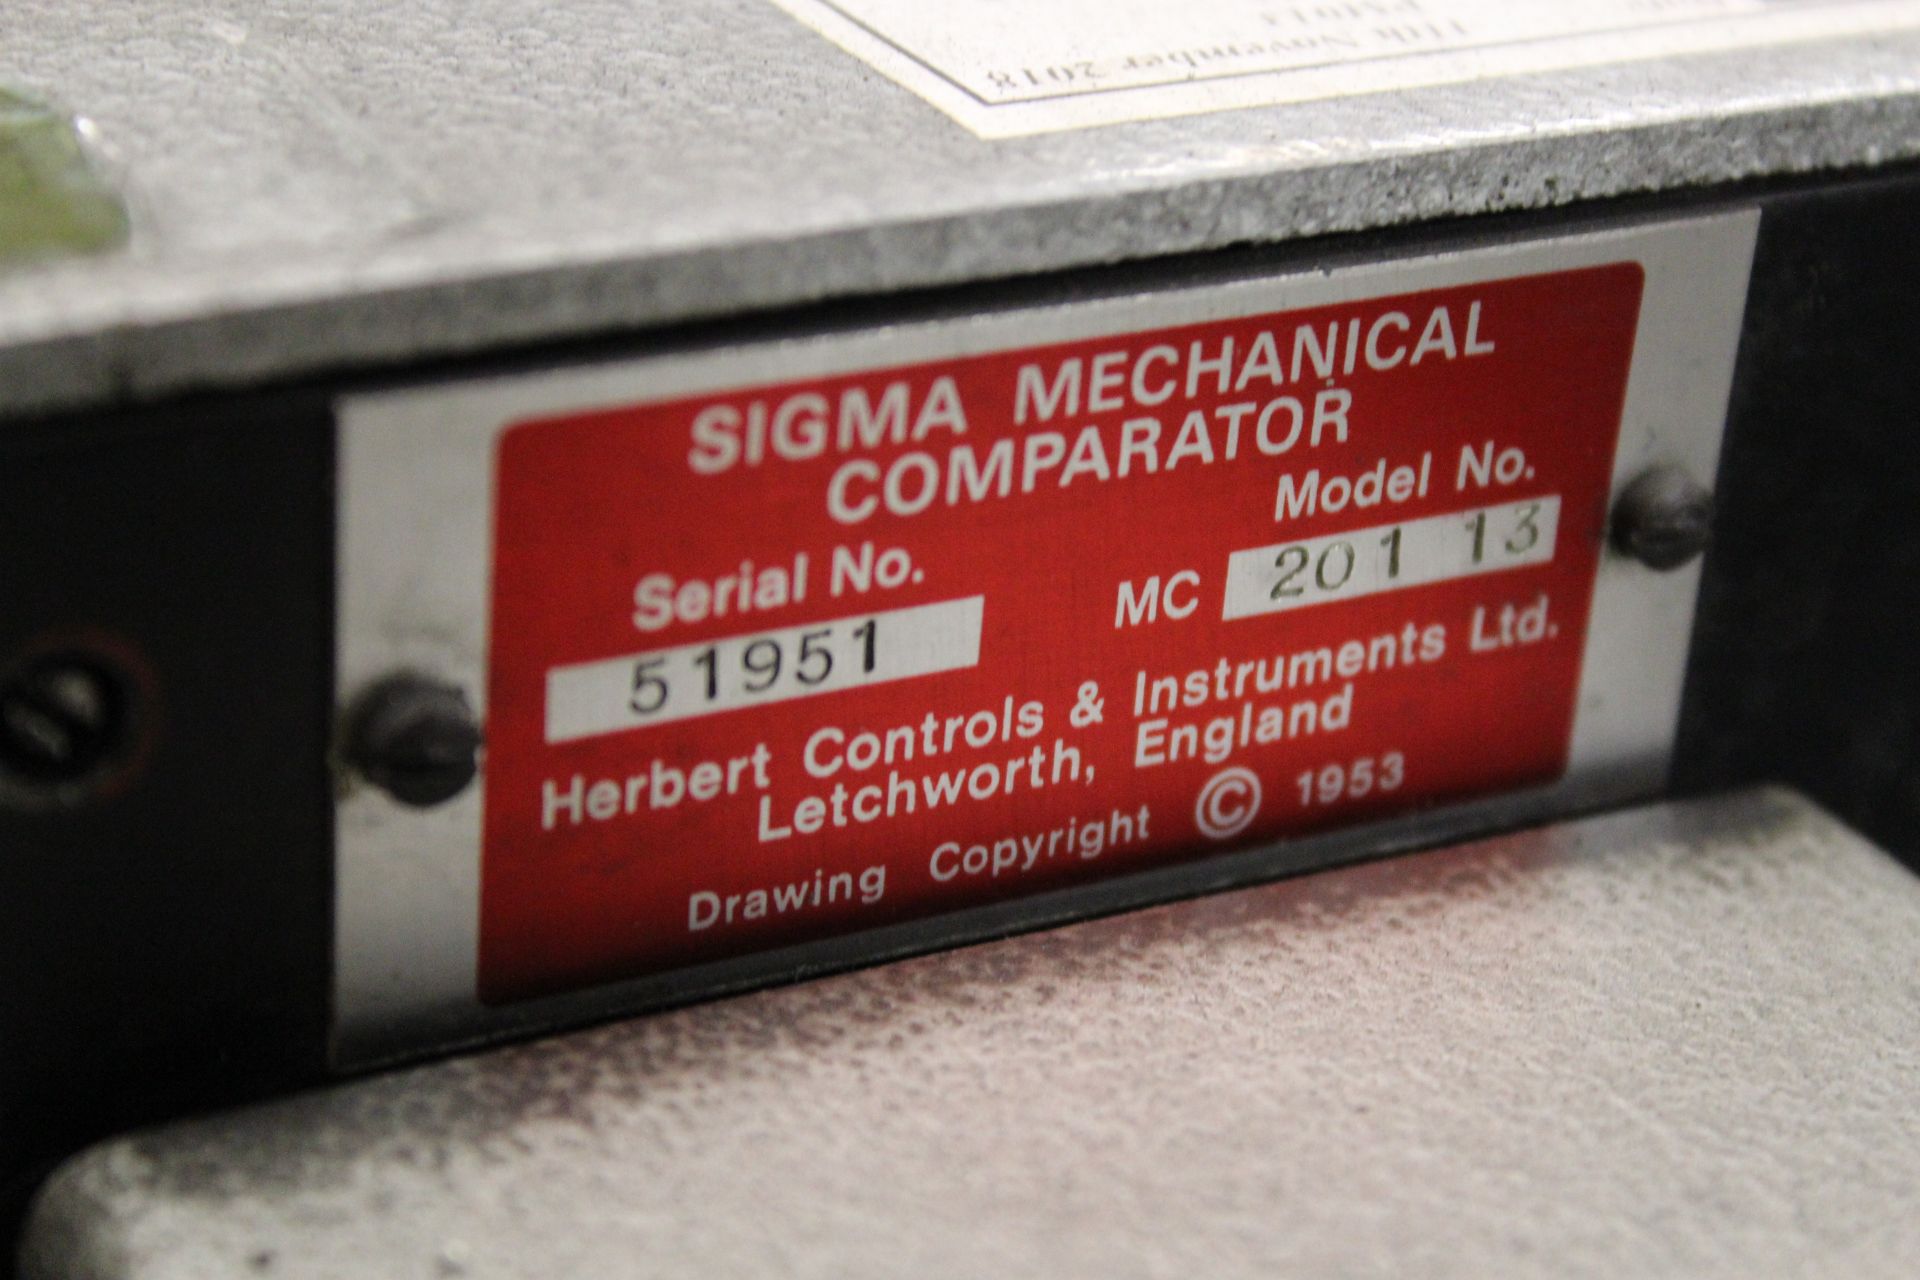 Sigma 201-13 mechanical comparator, Serial No. 51951 - Image 3 of 3